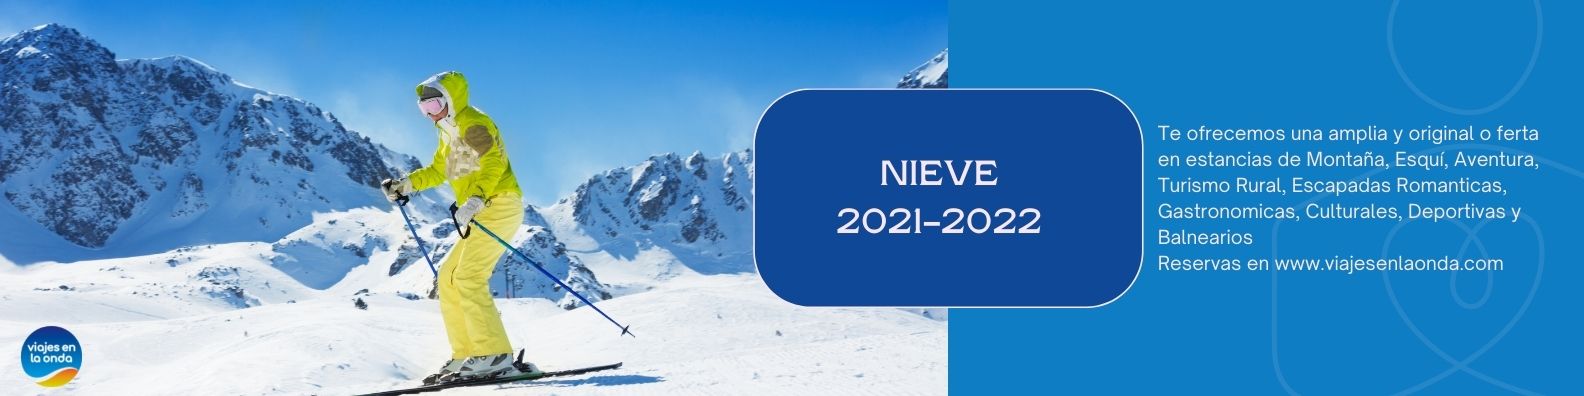 Nieve 2021-2022